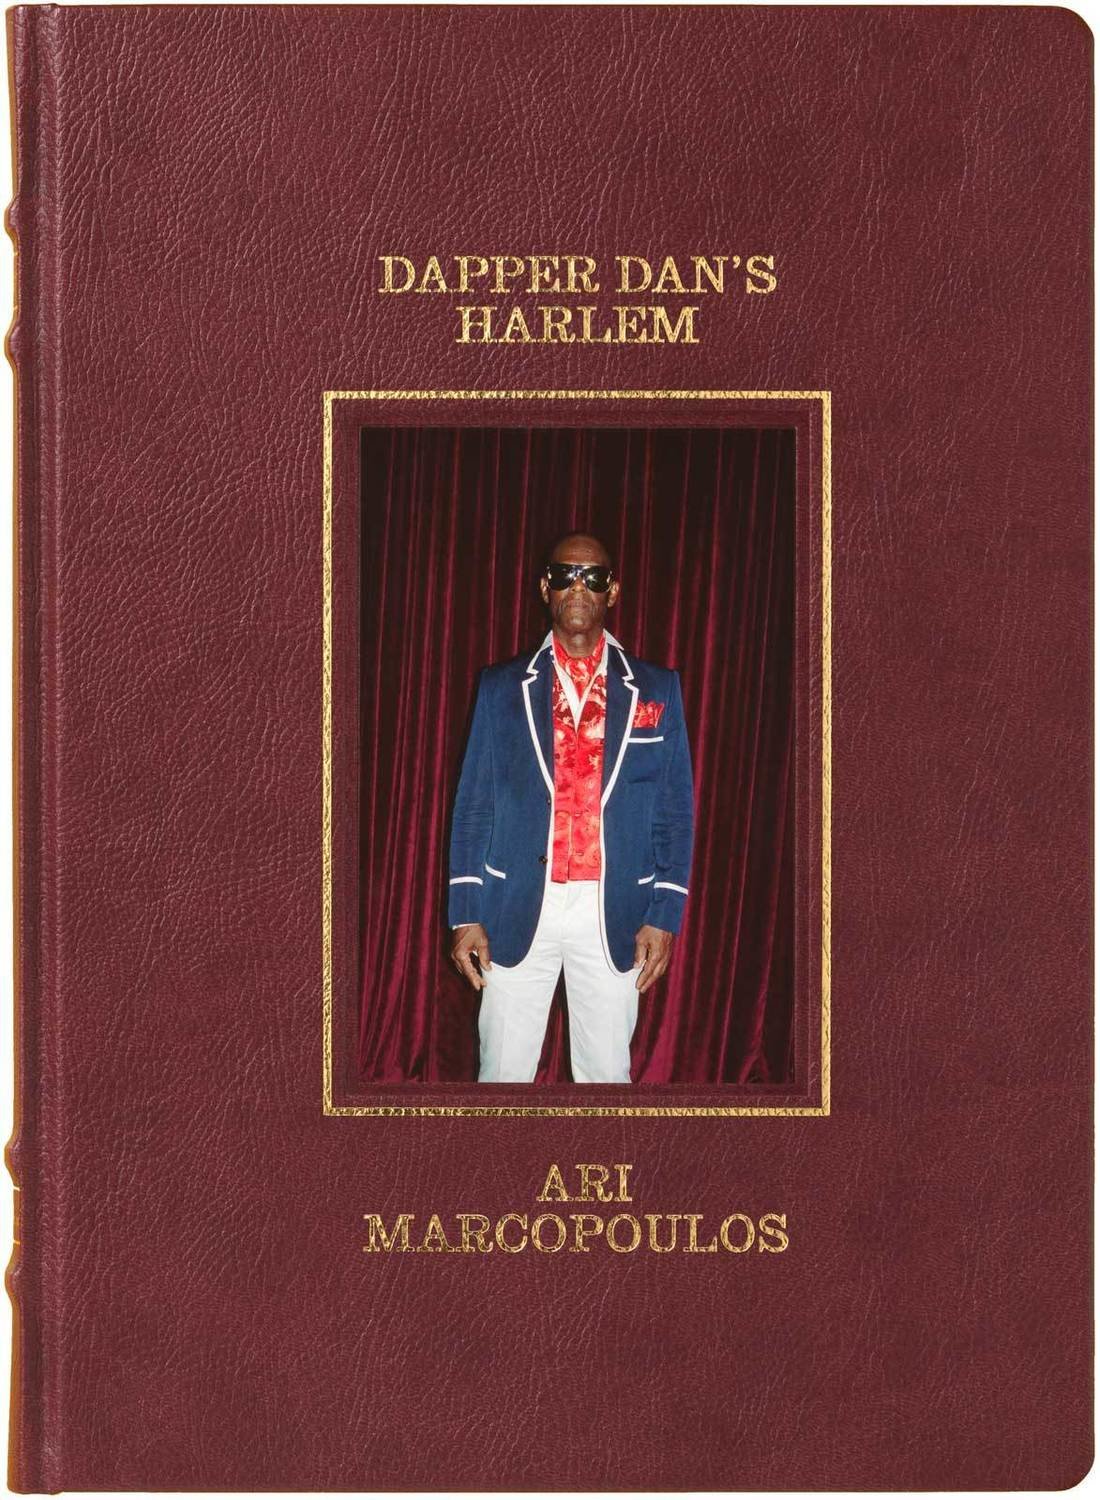 Reparations Club — Gucci x Dapper Dan's Harlem (First-Edition, Sealed)